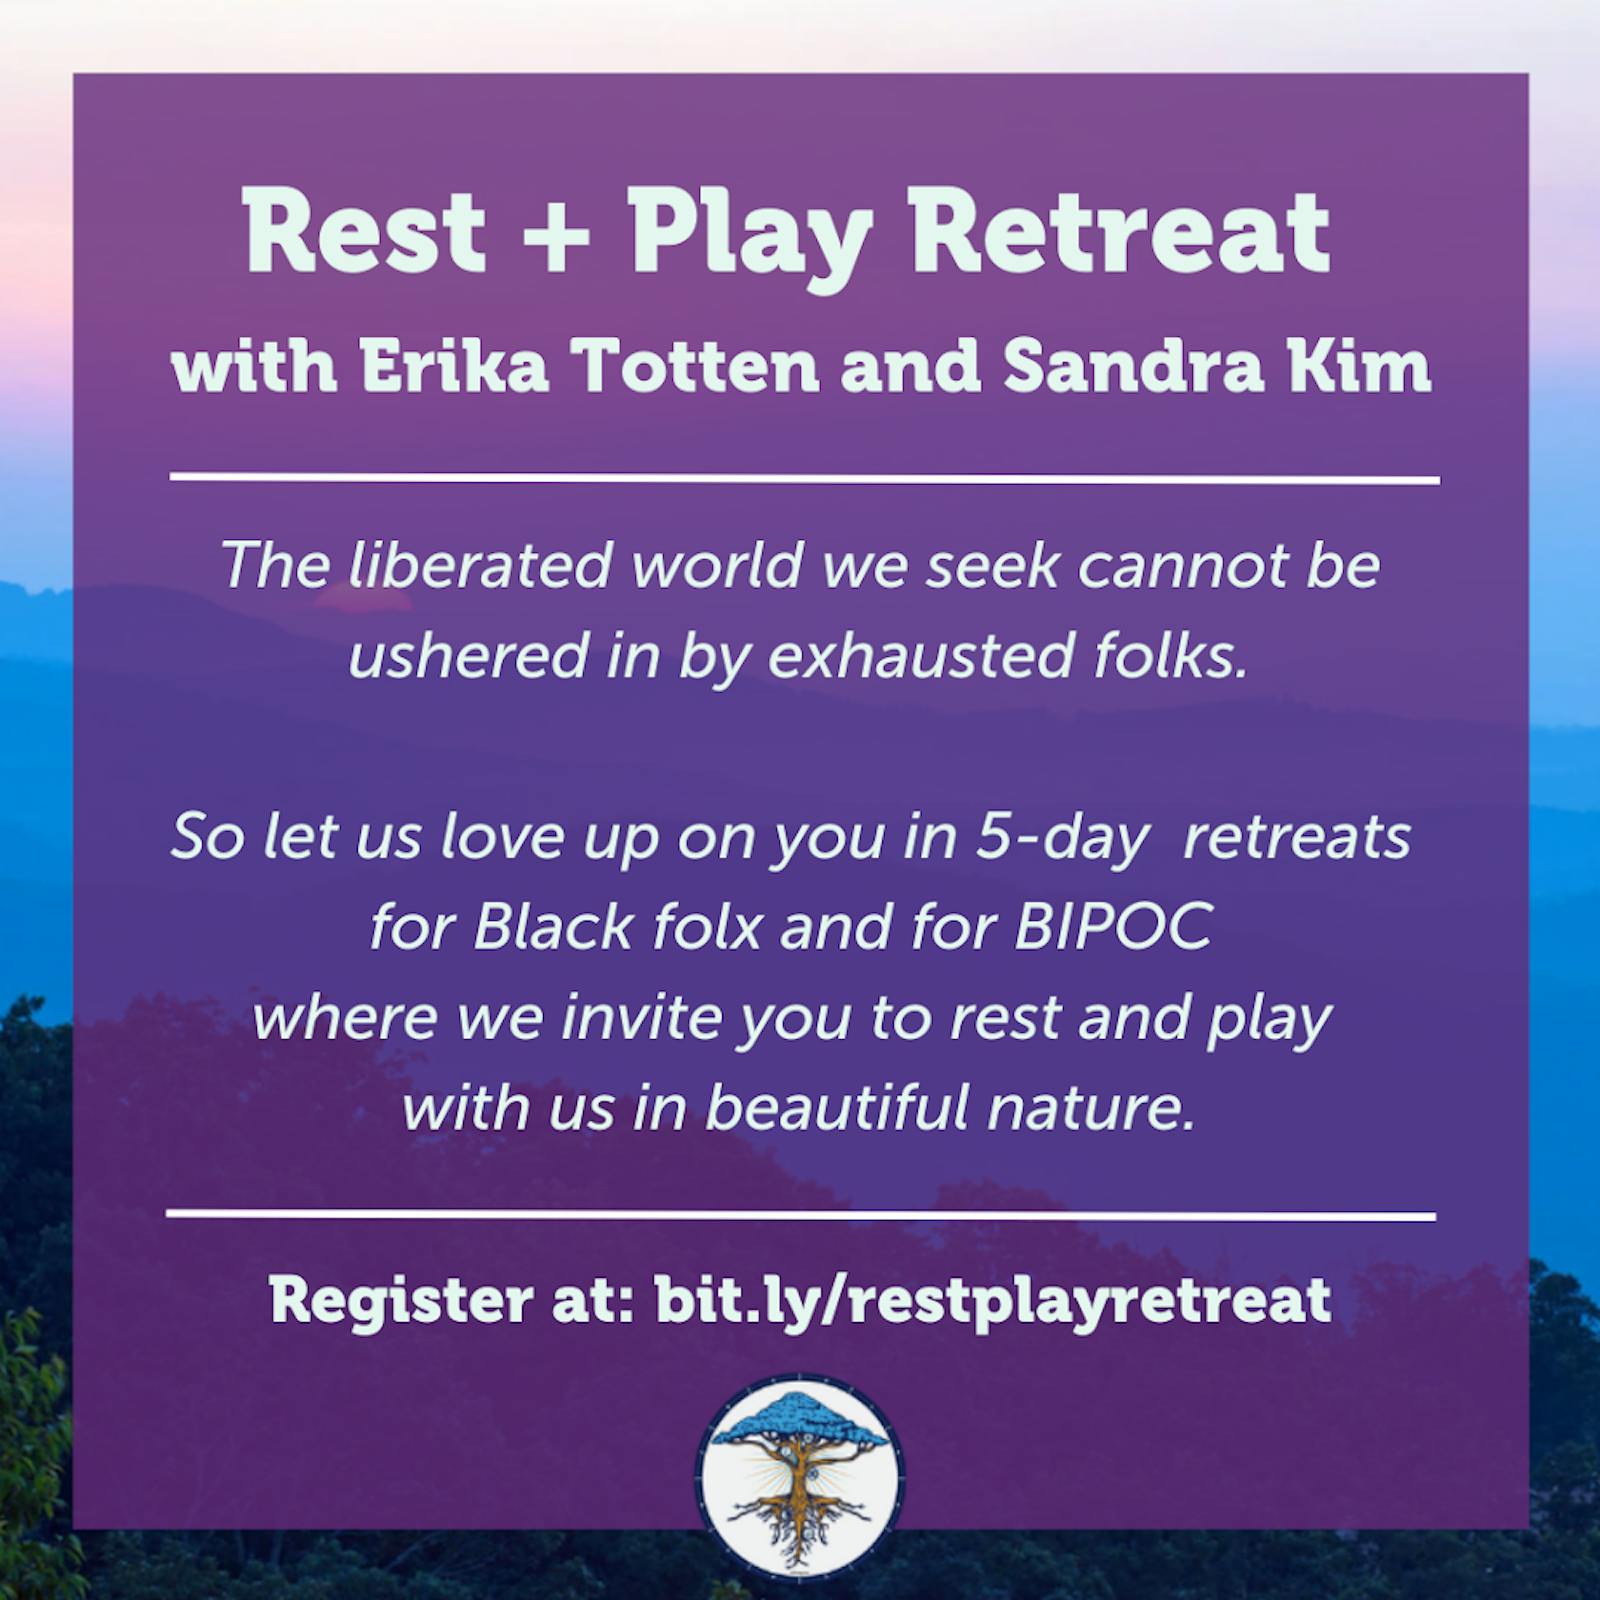 Rest + Play Retreats